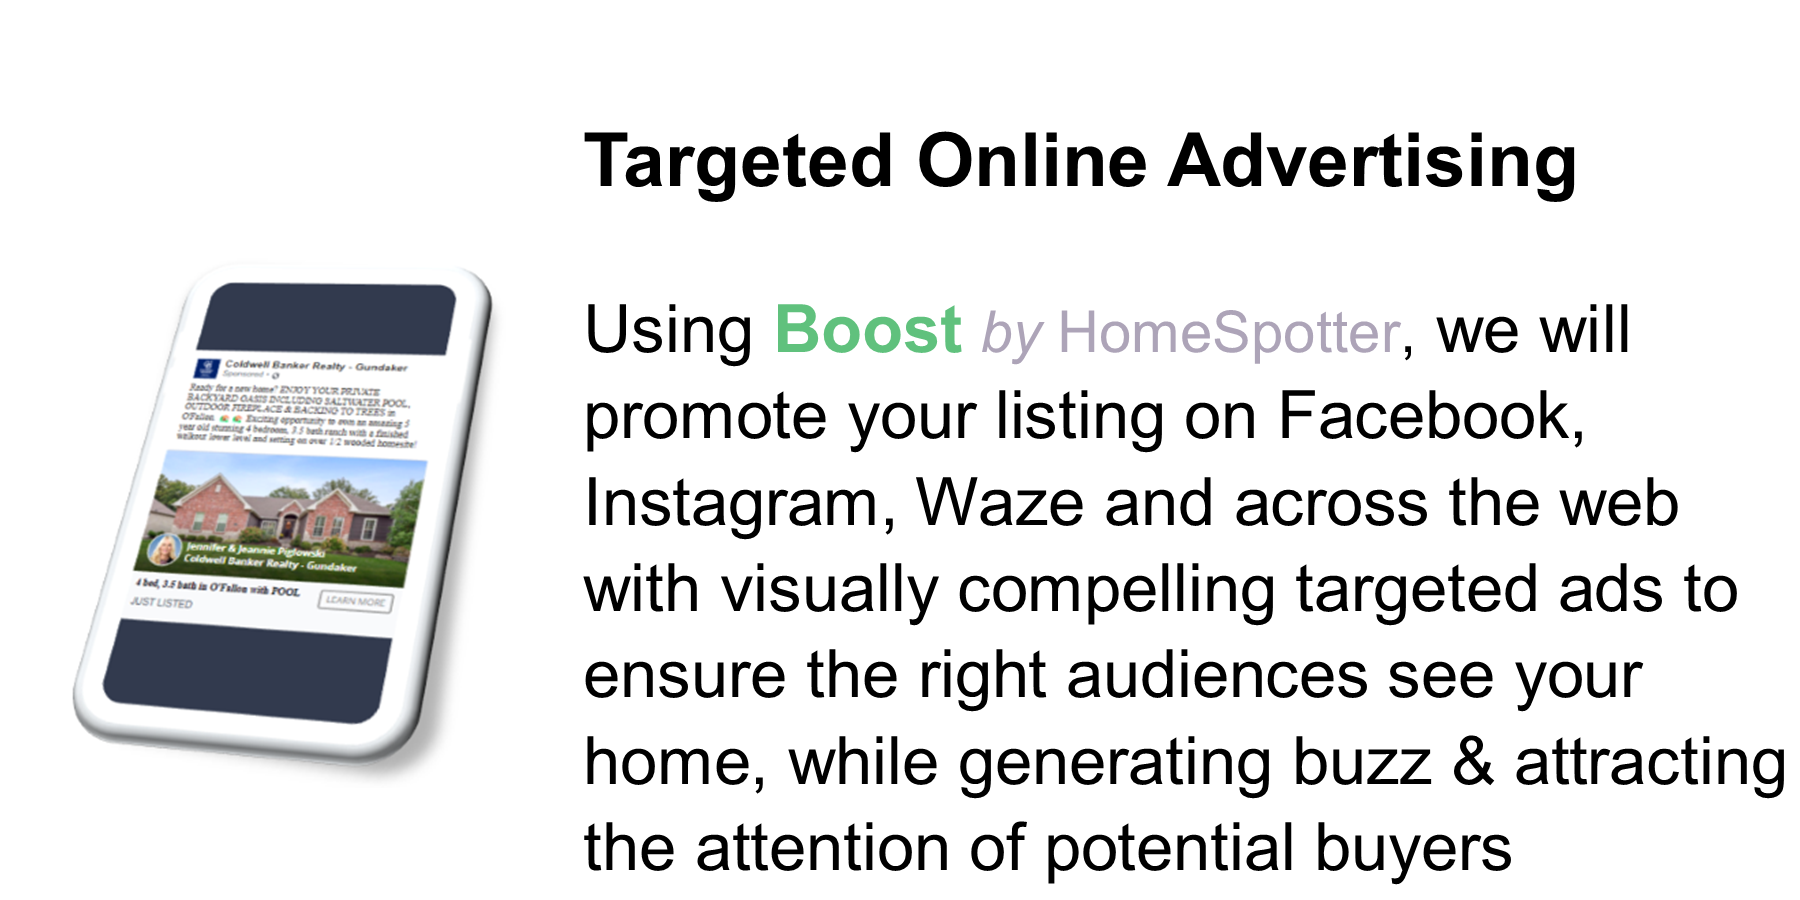 Targeted Online Advertising